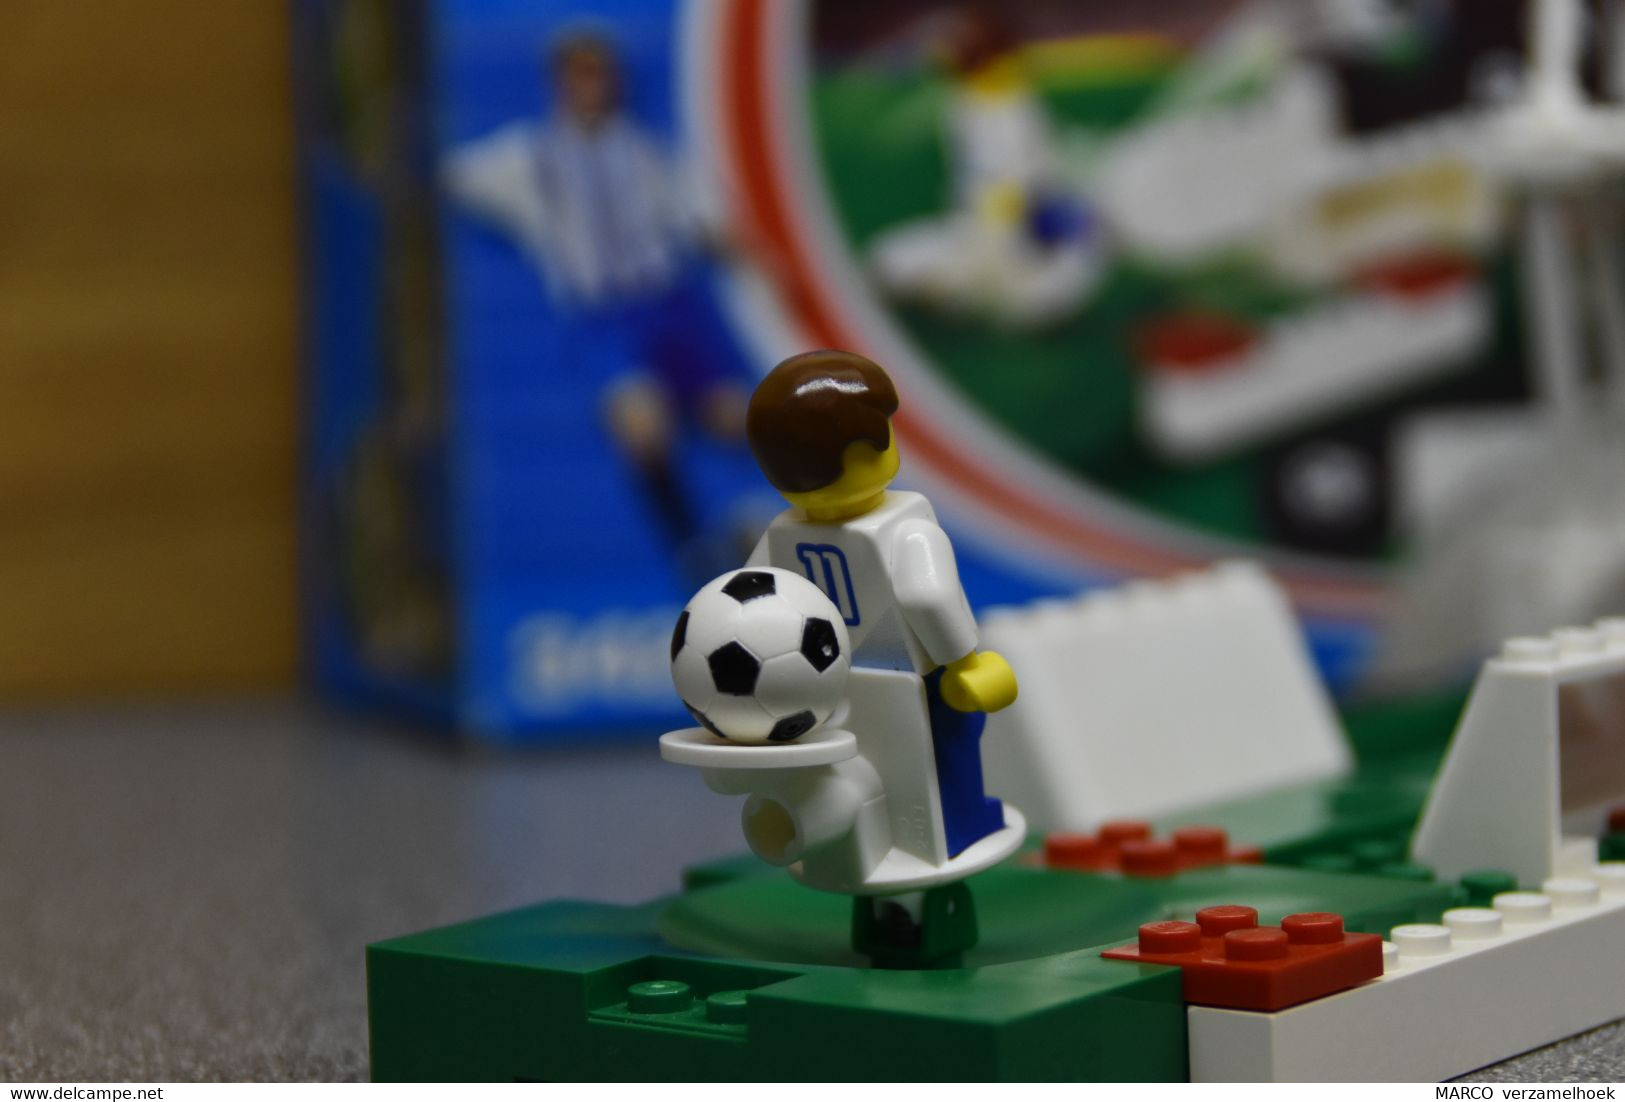 LEGO Bouwdoos 3423 Voetbal-football-soccer-Fußball - Lego System